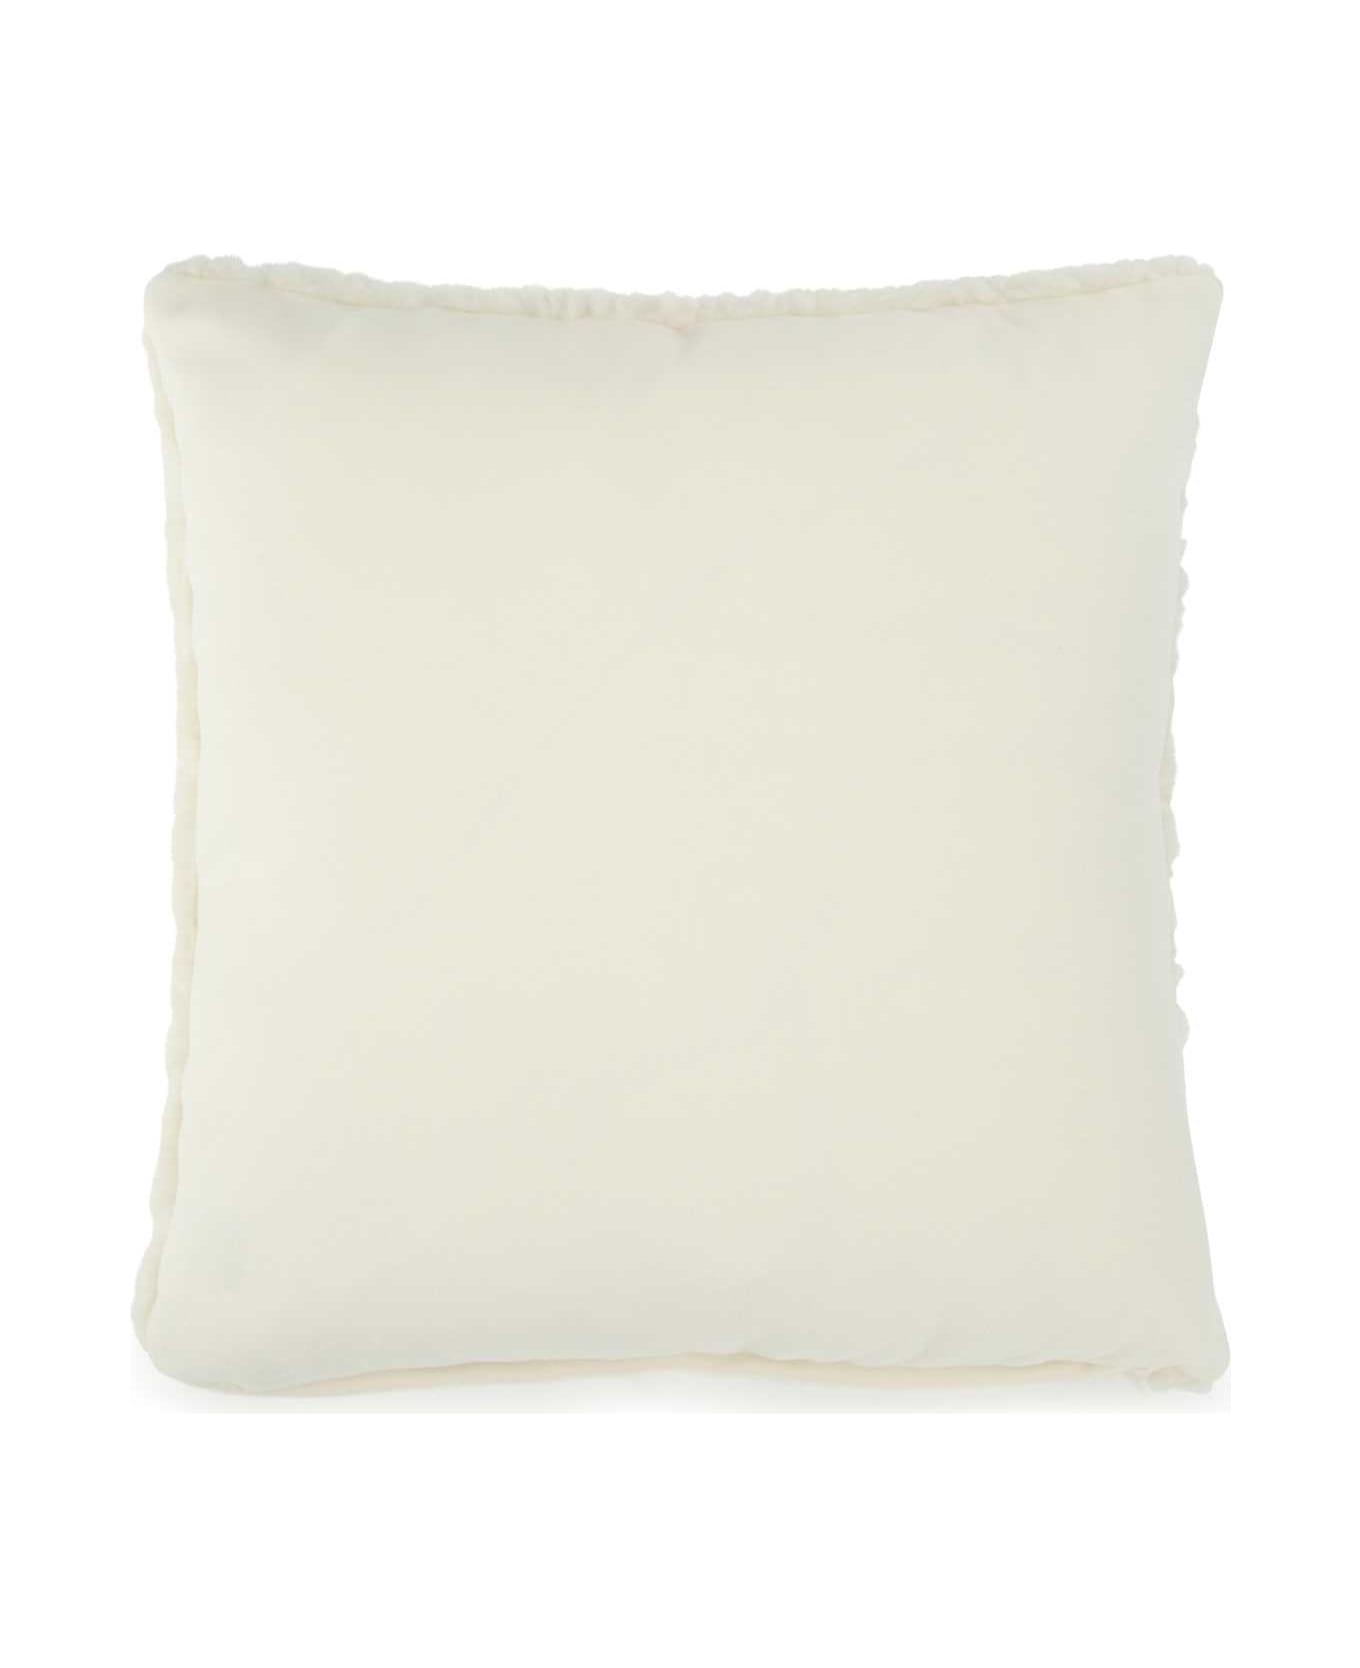 Prada Ivory Eco Fur Pillow - F0I55 クッション